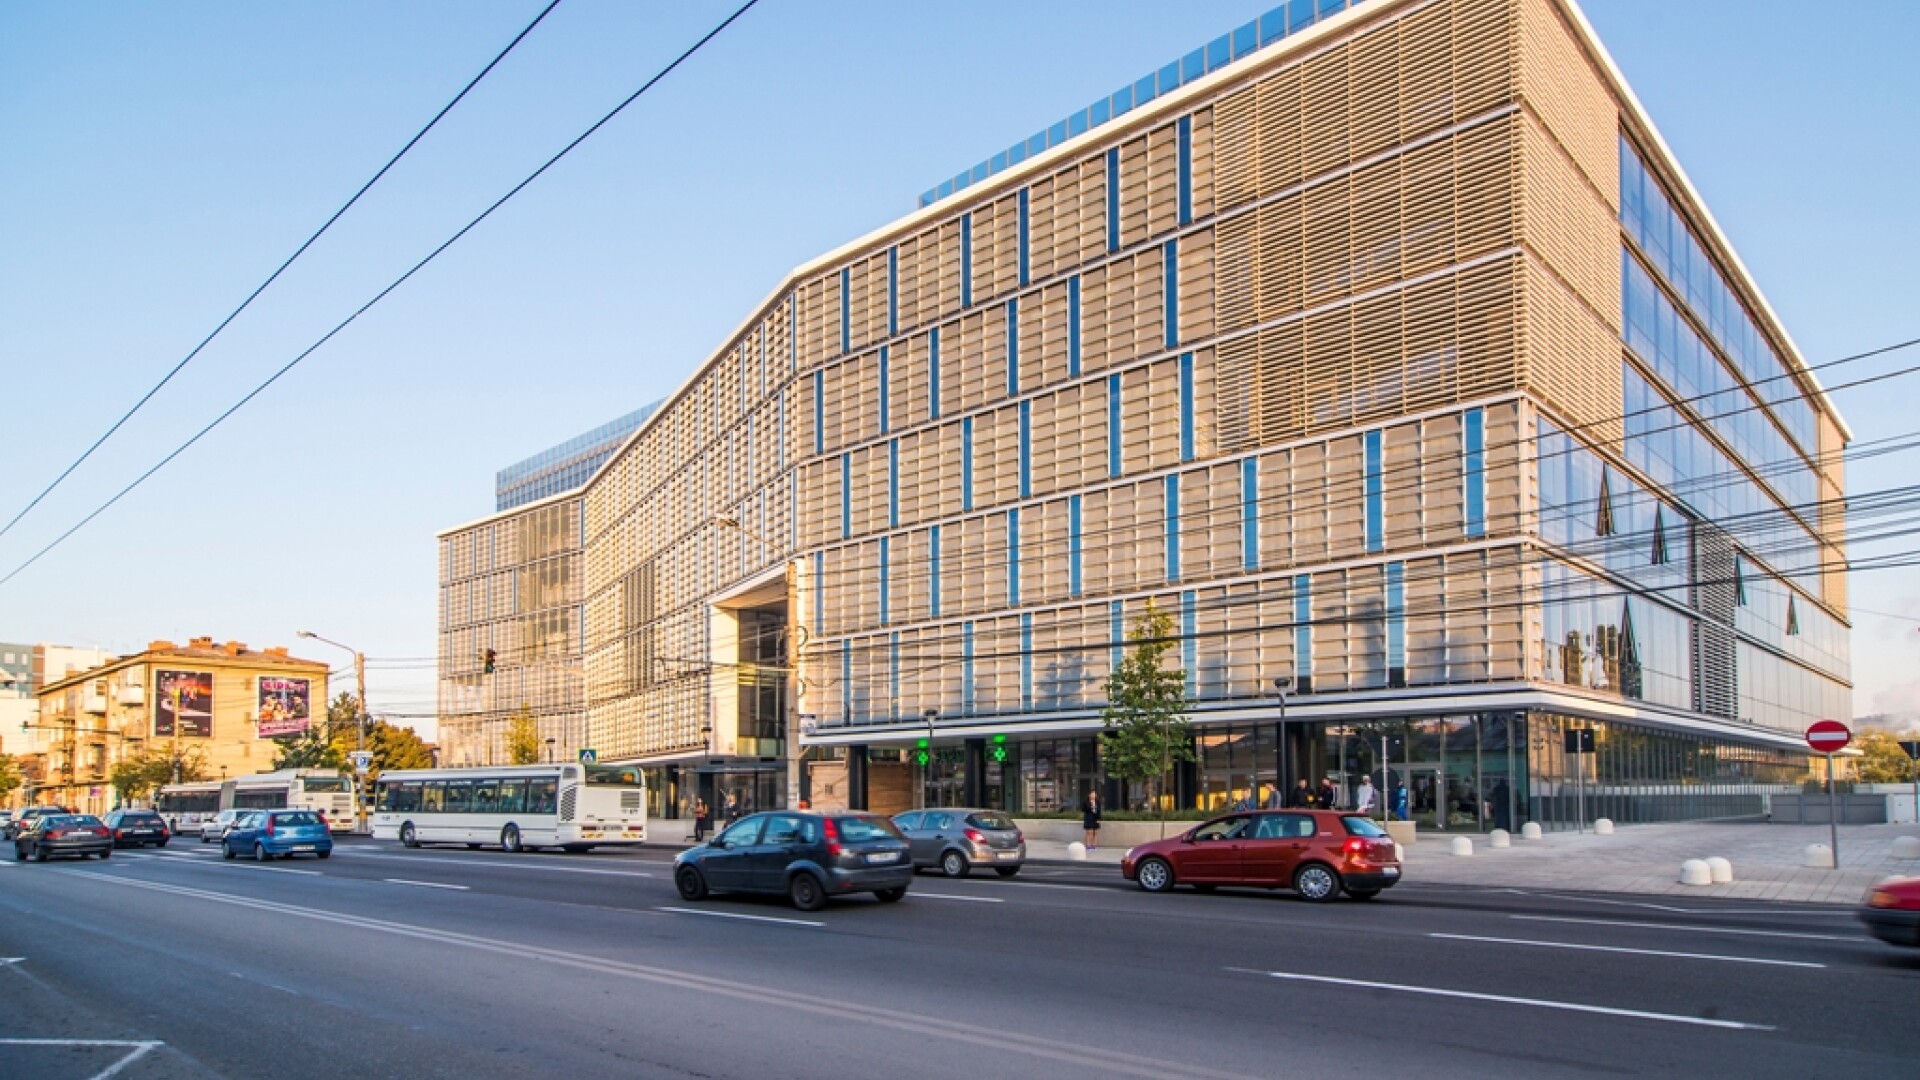 Locuri de munca atractive in Cluj-Napoca. Bosch deschide un nou birou